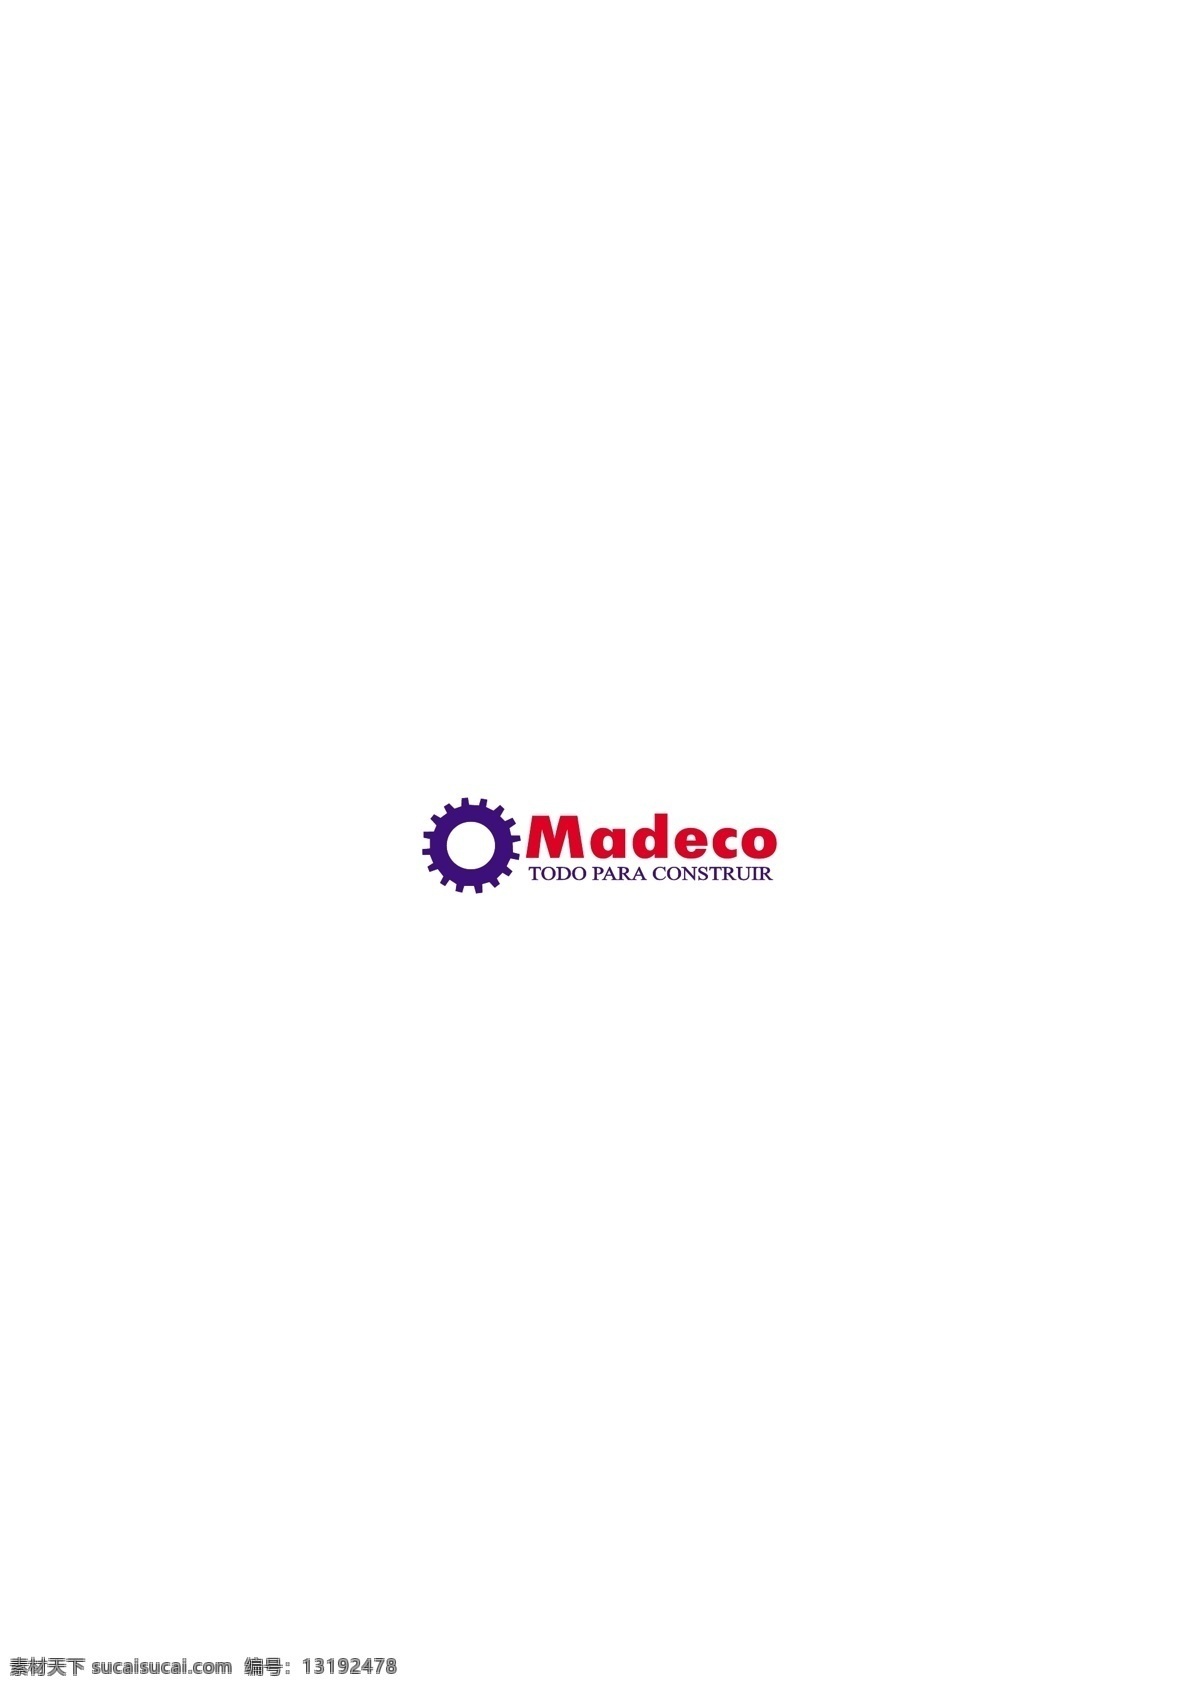 madeco logo大全 logo 设计欣赏 商业矢量 矢量下载 化工业 标志 标志设计 欣赏 网页矢量 矢量图 其他矢量图